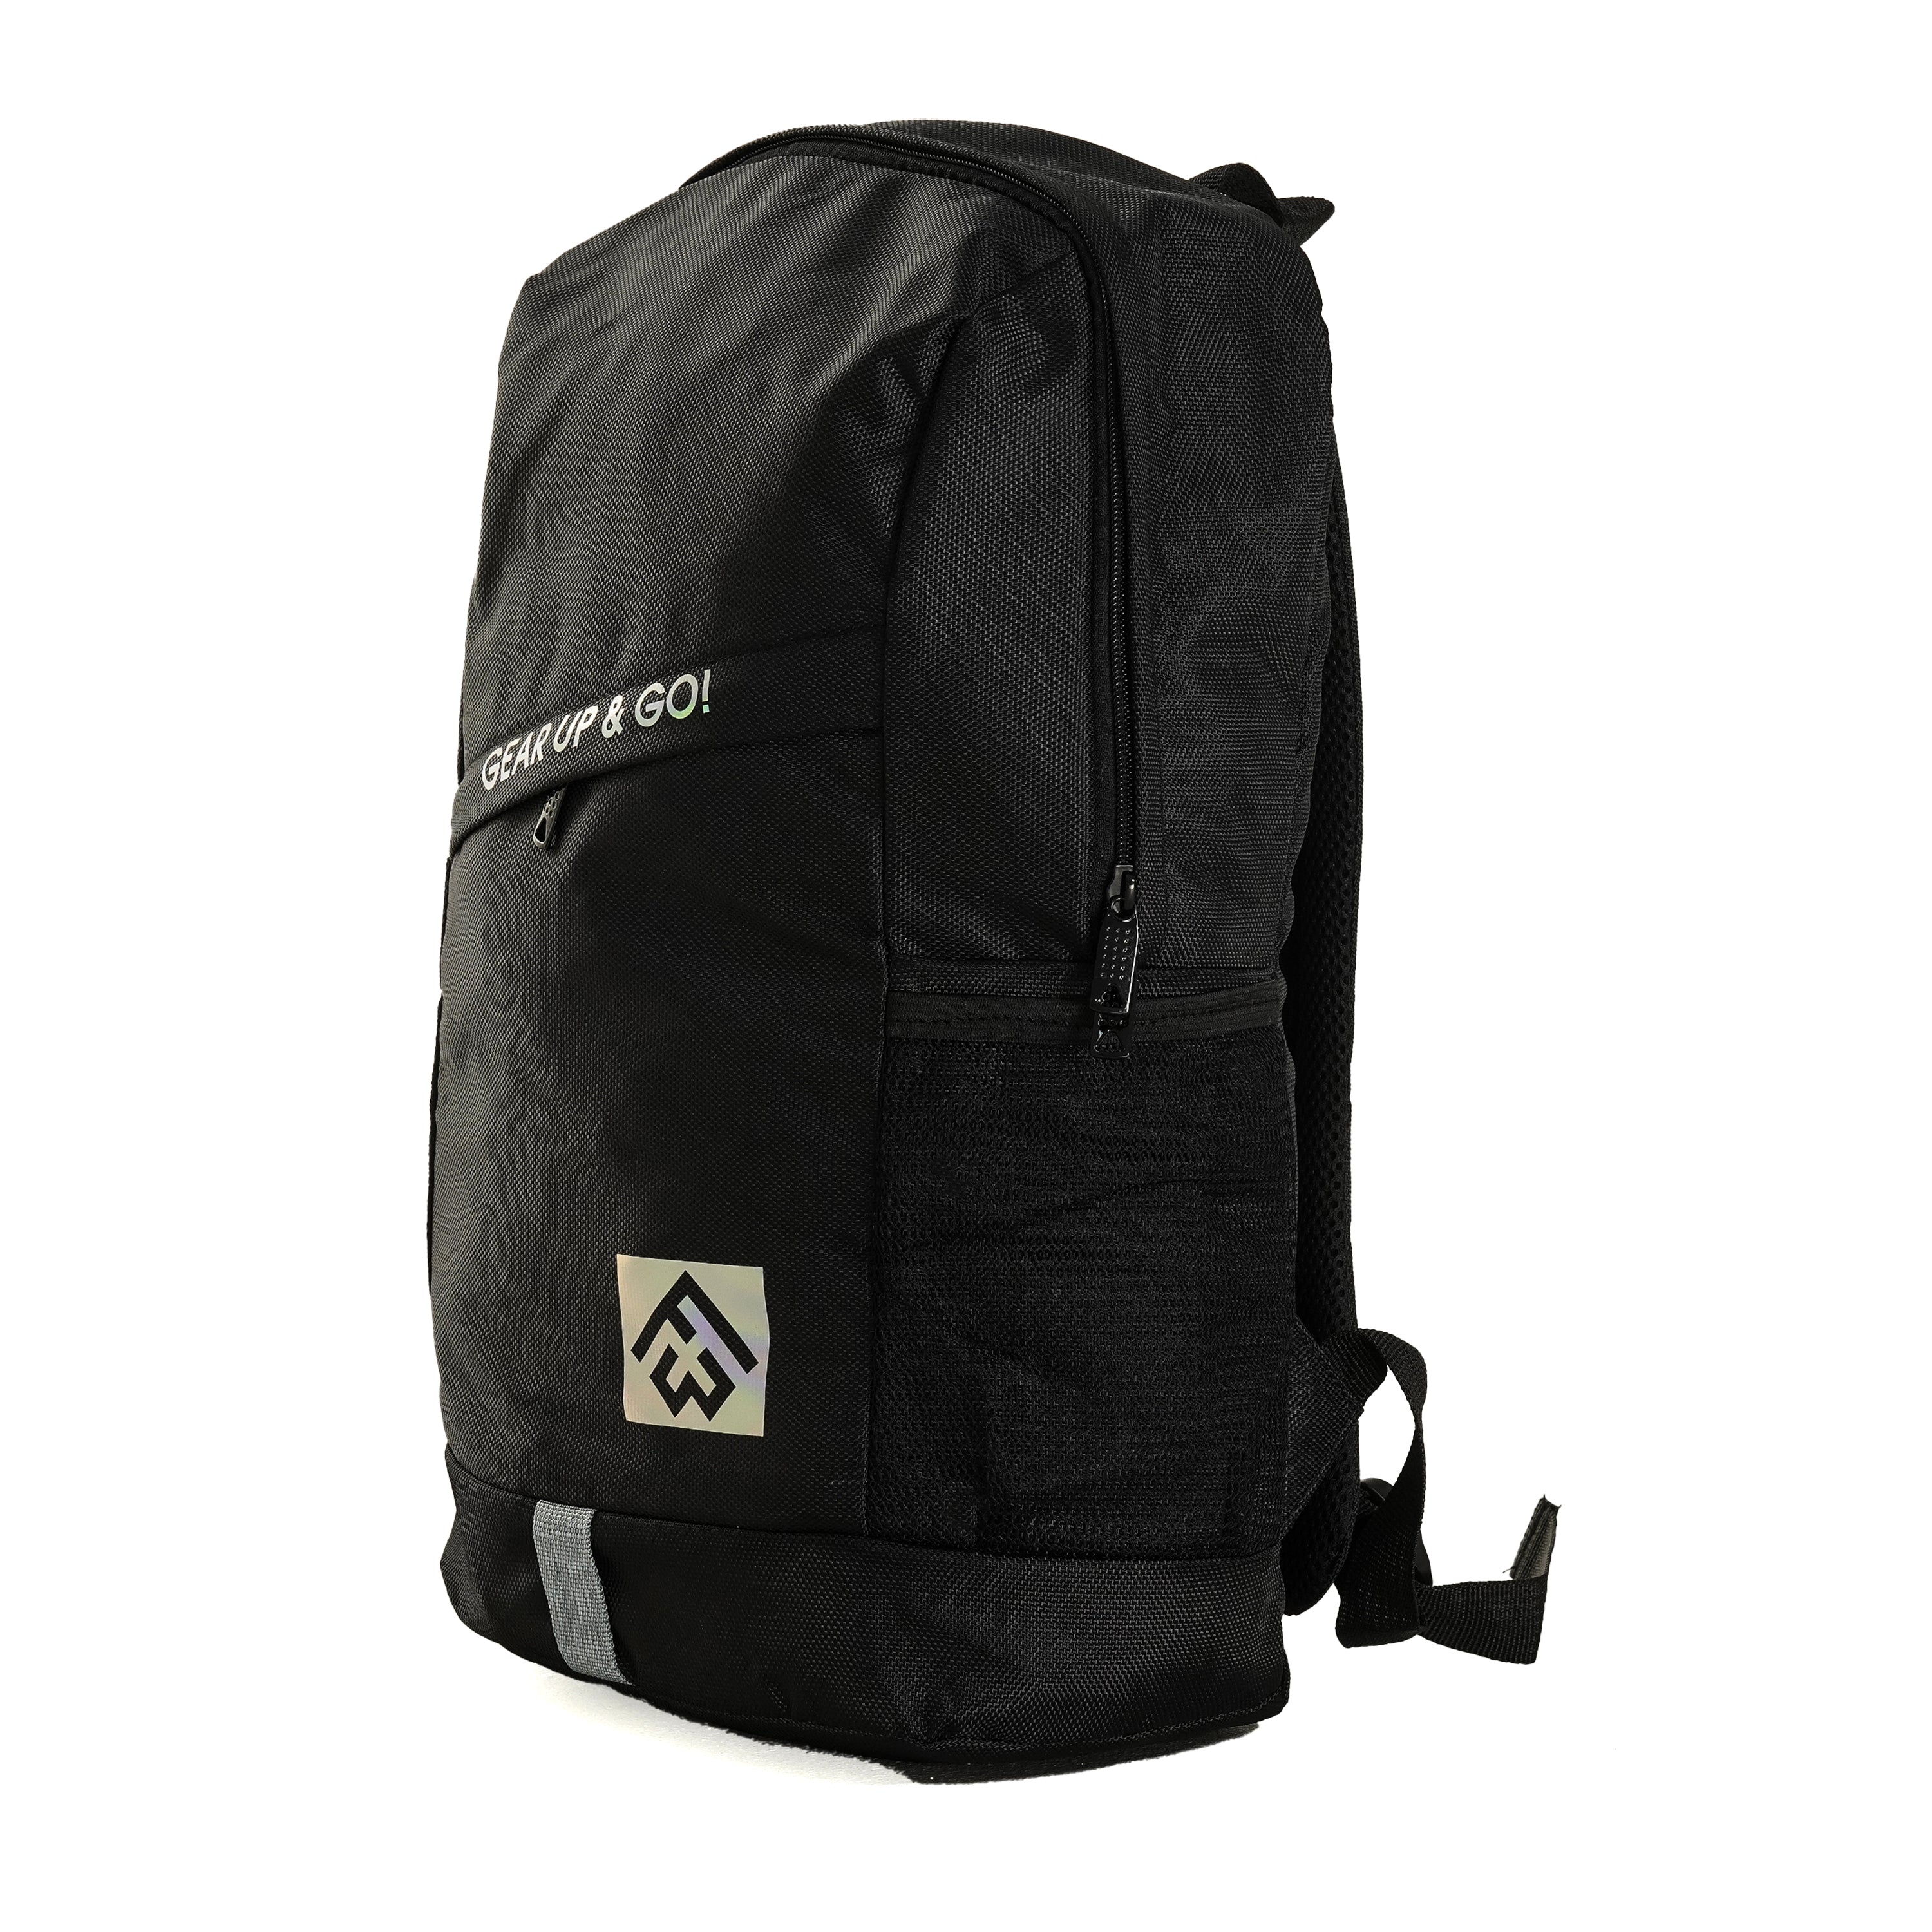 Fibr - Regal Backpack